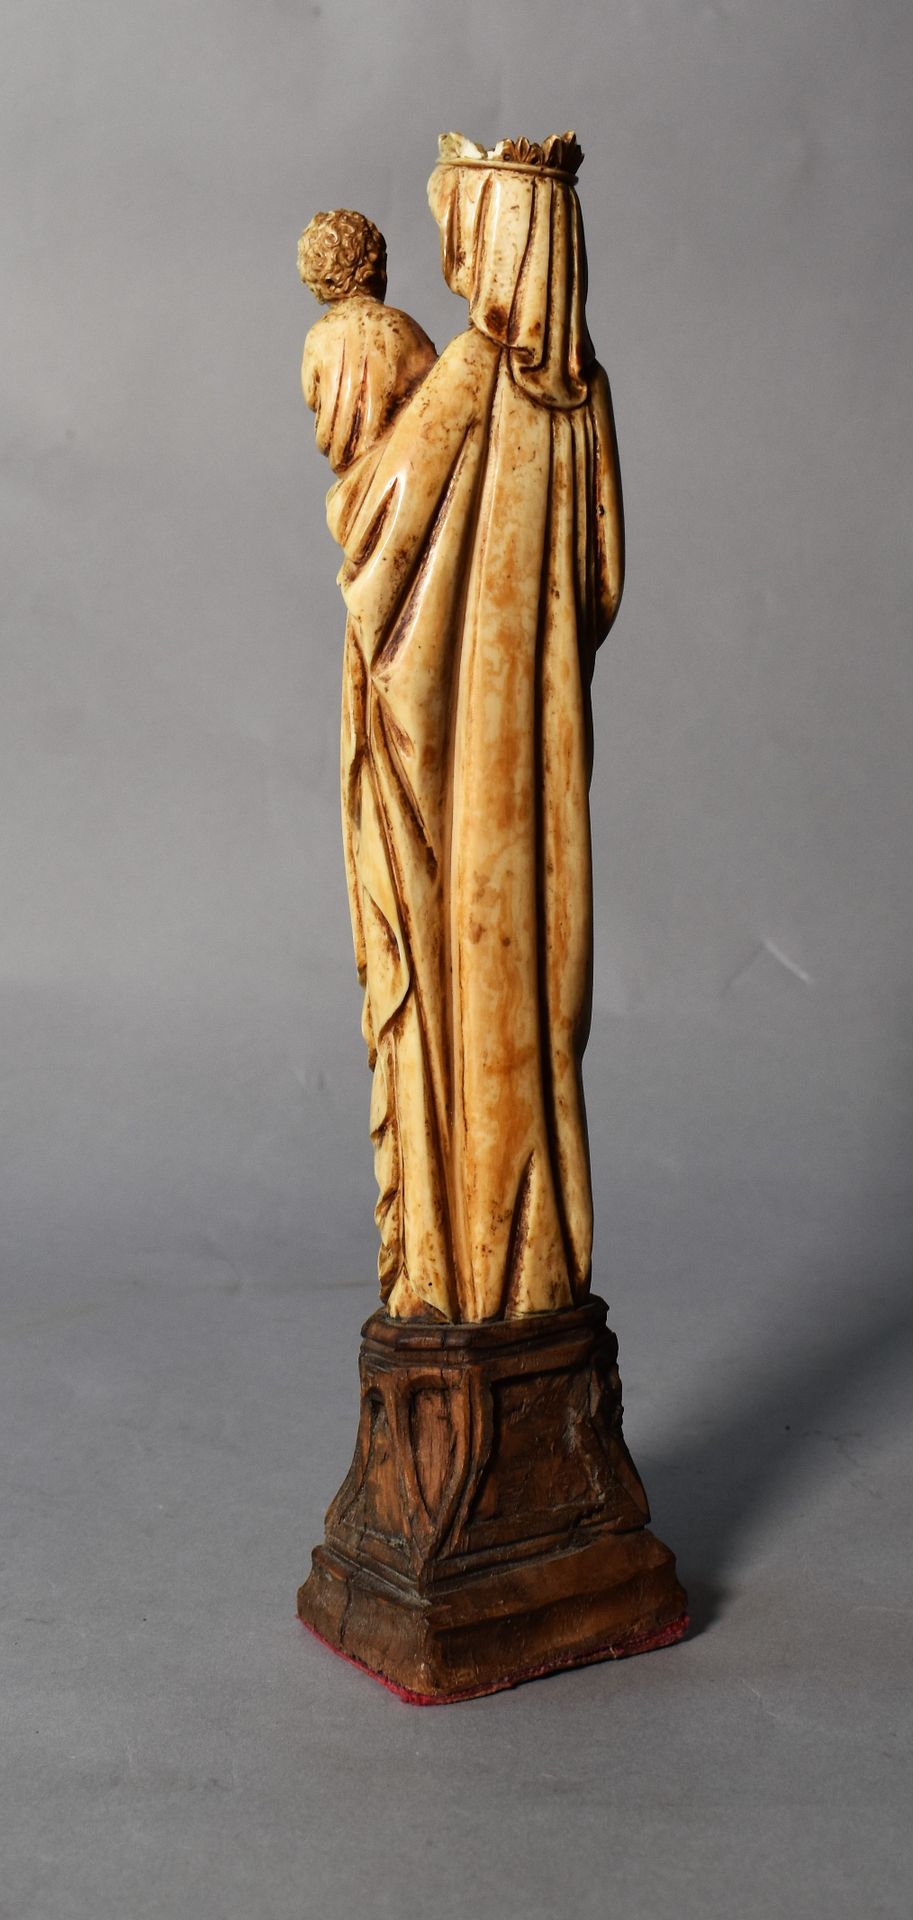 Null 哥特式风格的圣母和儿童雕像（事故）。木质底座（小缺口）。19世纪晚期。高22厘米

交付给书房的地段